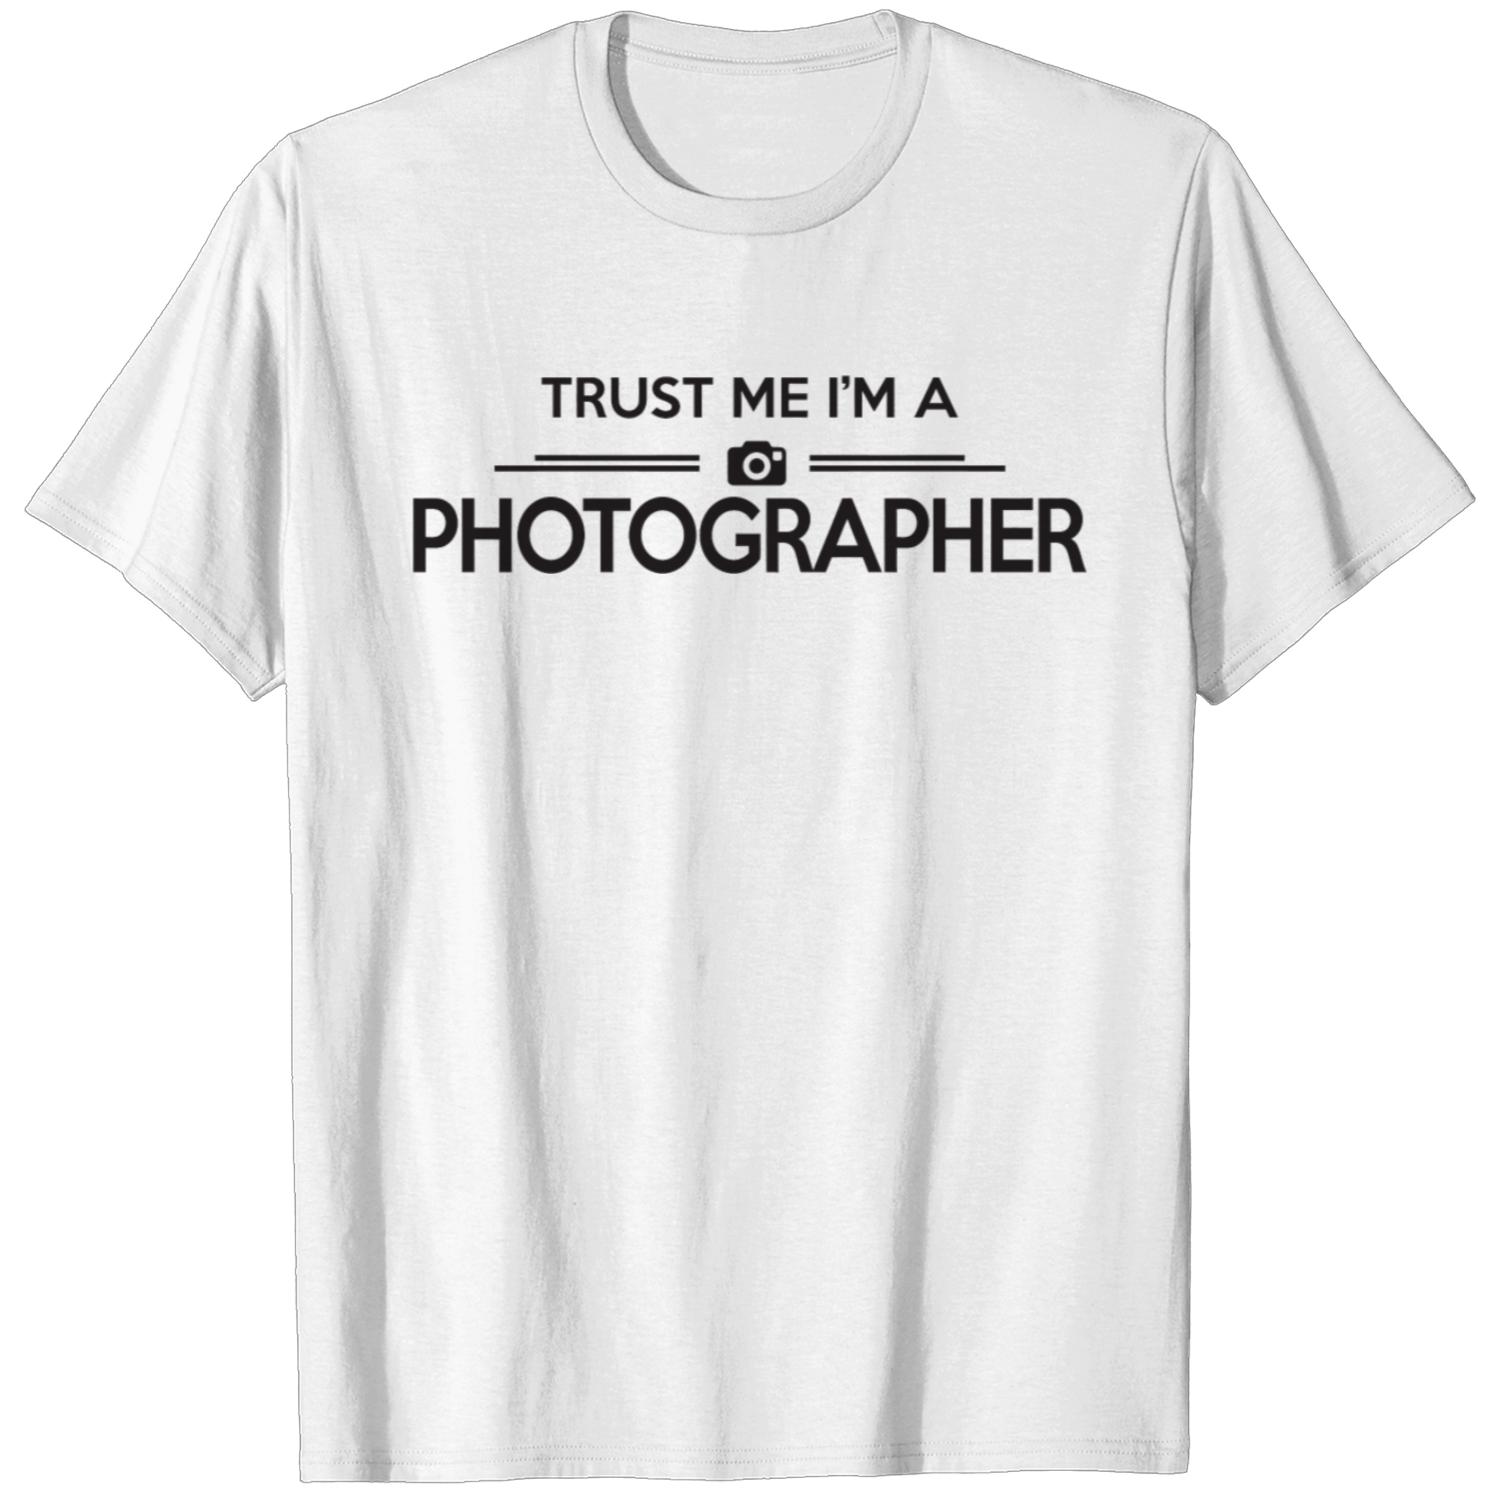 Photographer - Trust me I'm a Photographer T-shirt